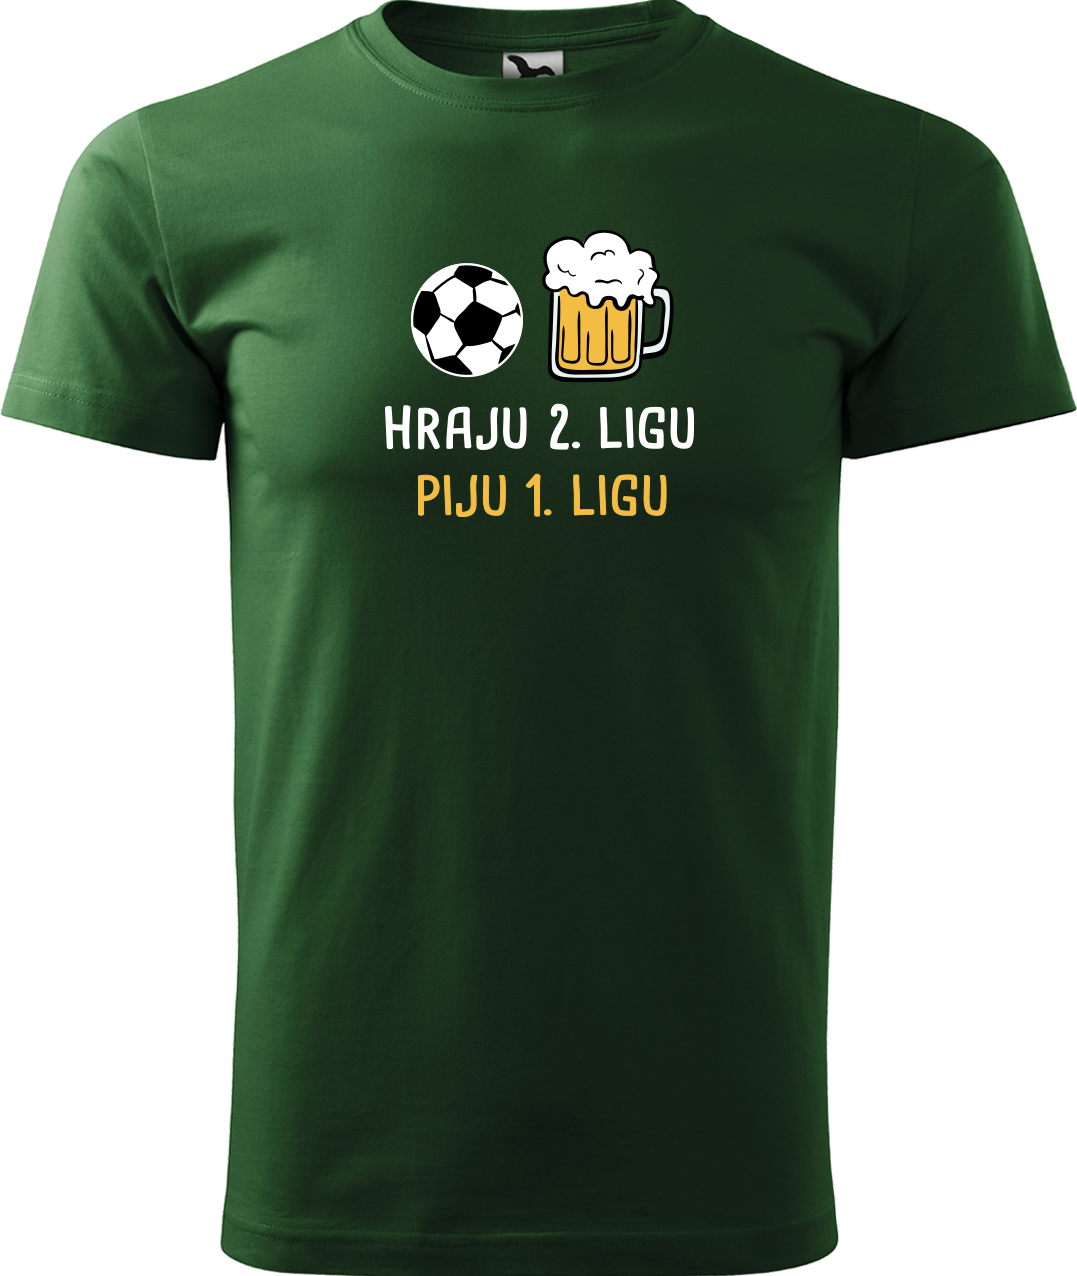 Tričko pro fotbalistu - Piju 1. ligu Velikost: XL, Barva: Lahvově zelená (06)